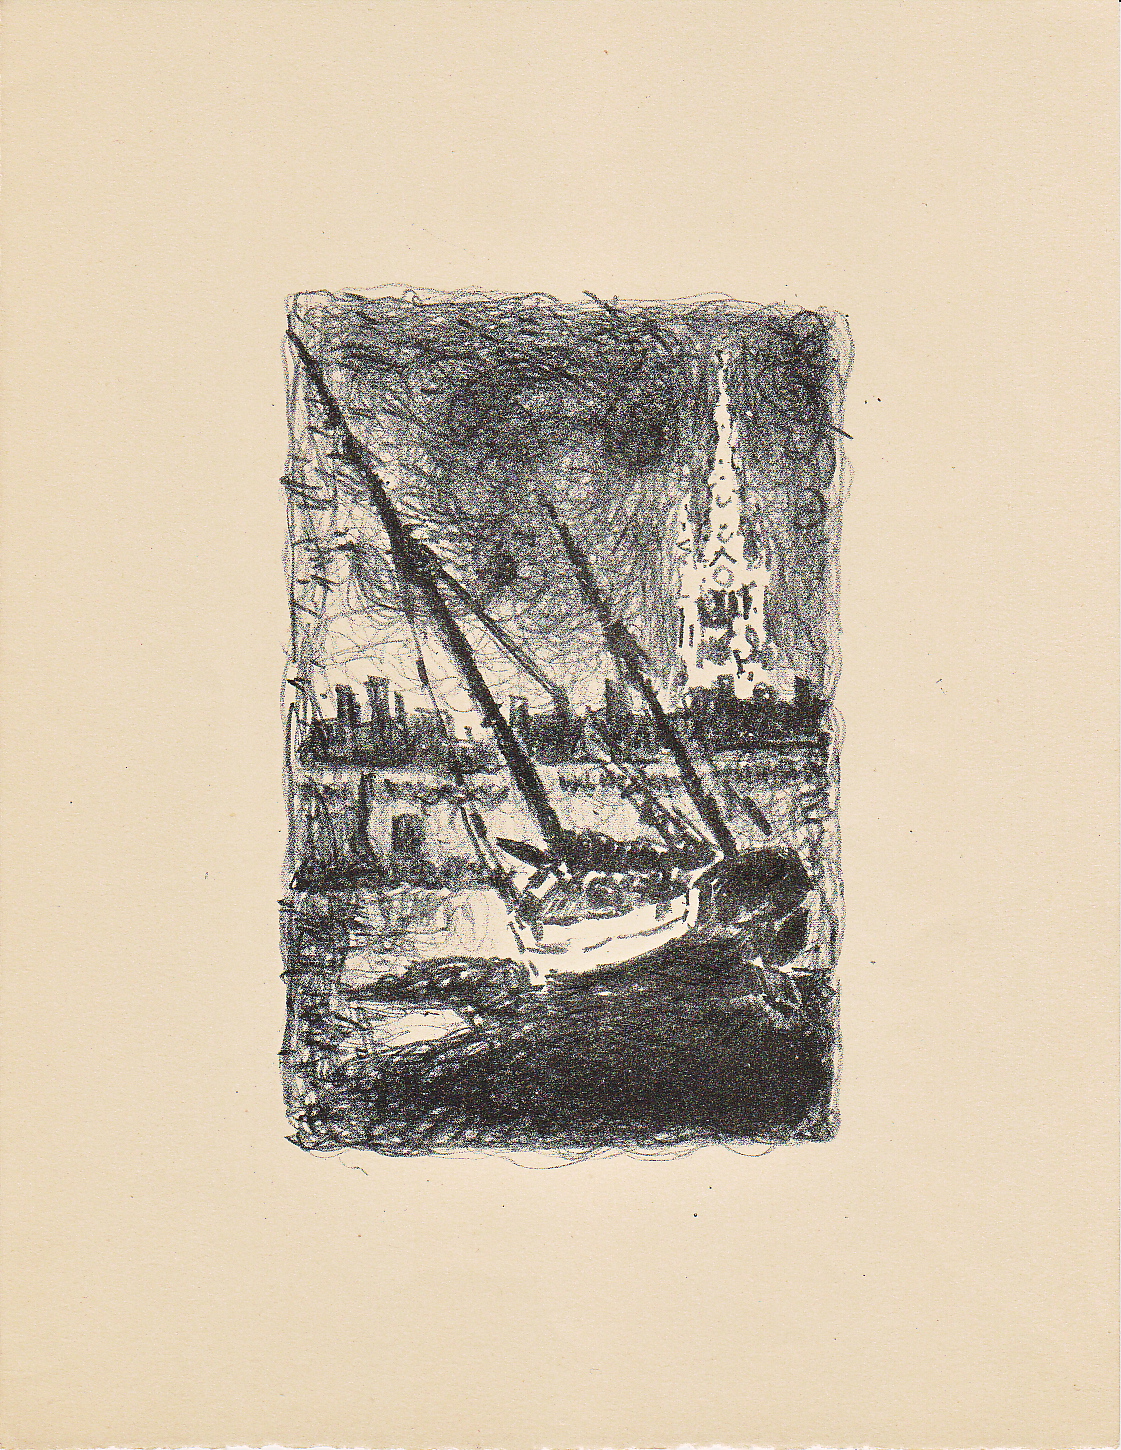 Paul Signac, Saint Malo I, lithograph, 1927